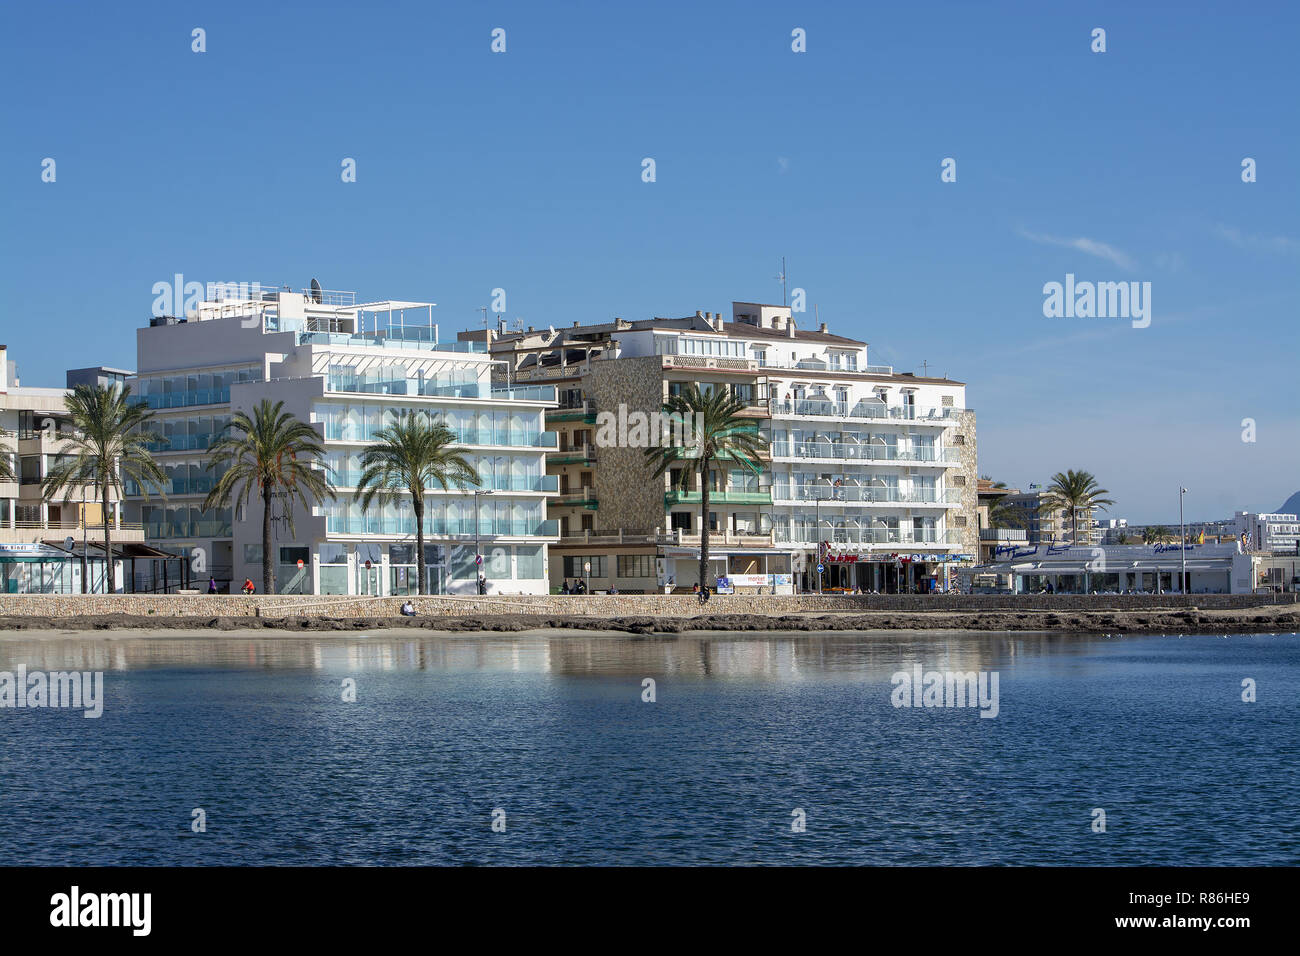 PALMA DE MALLORCA, SPAIN - DECEMBER 6, 2018: Winter calm blue water in front of BQ Aquamarina Hotel on December 6, 2018 in Palma de Mallorca, Spain. Stock Photo